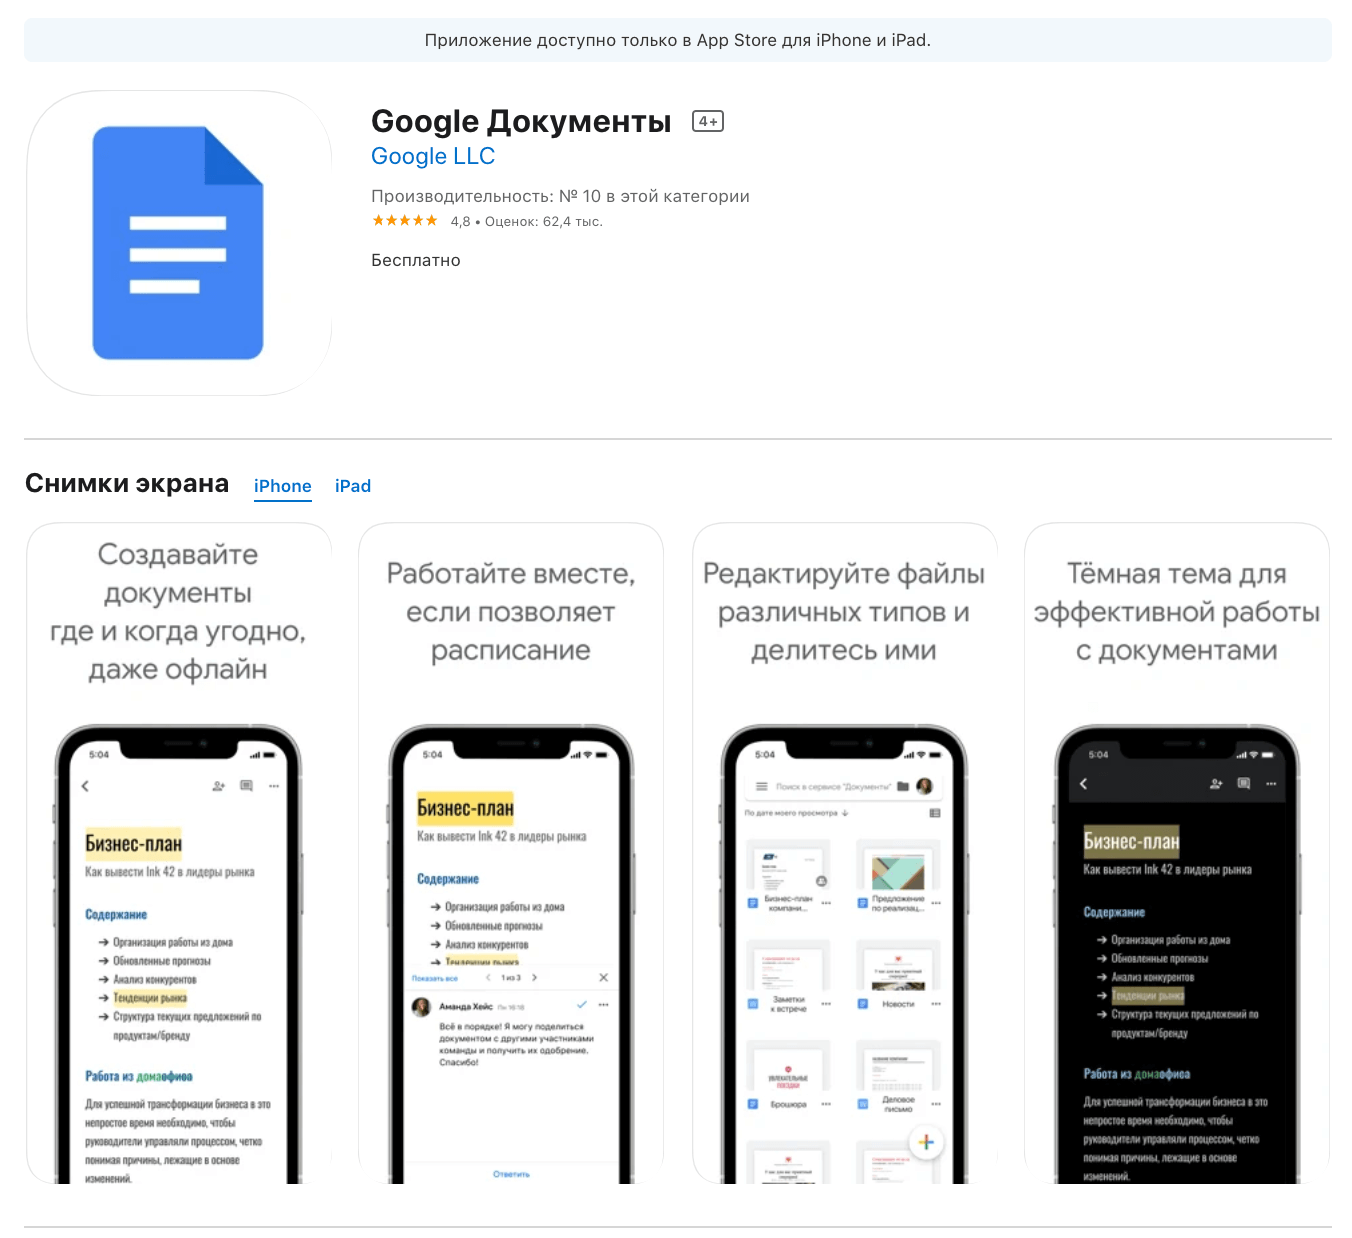 Google documents-mobile app